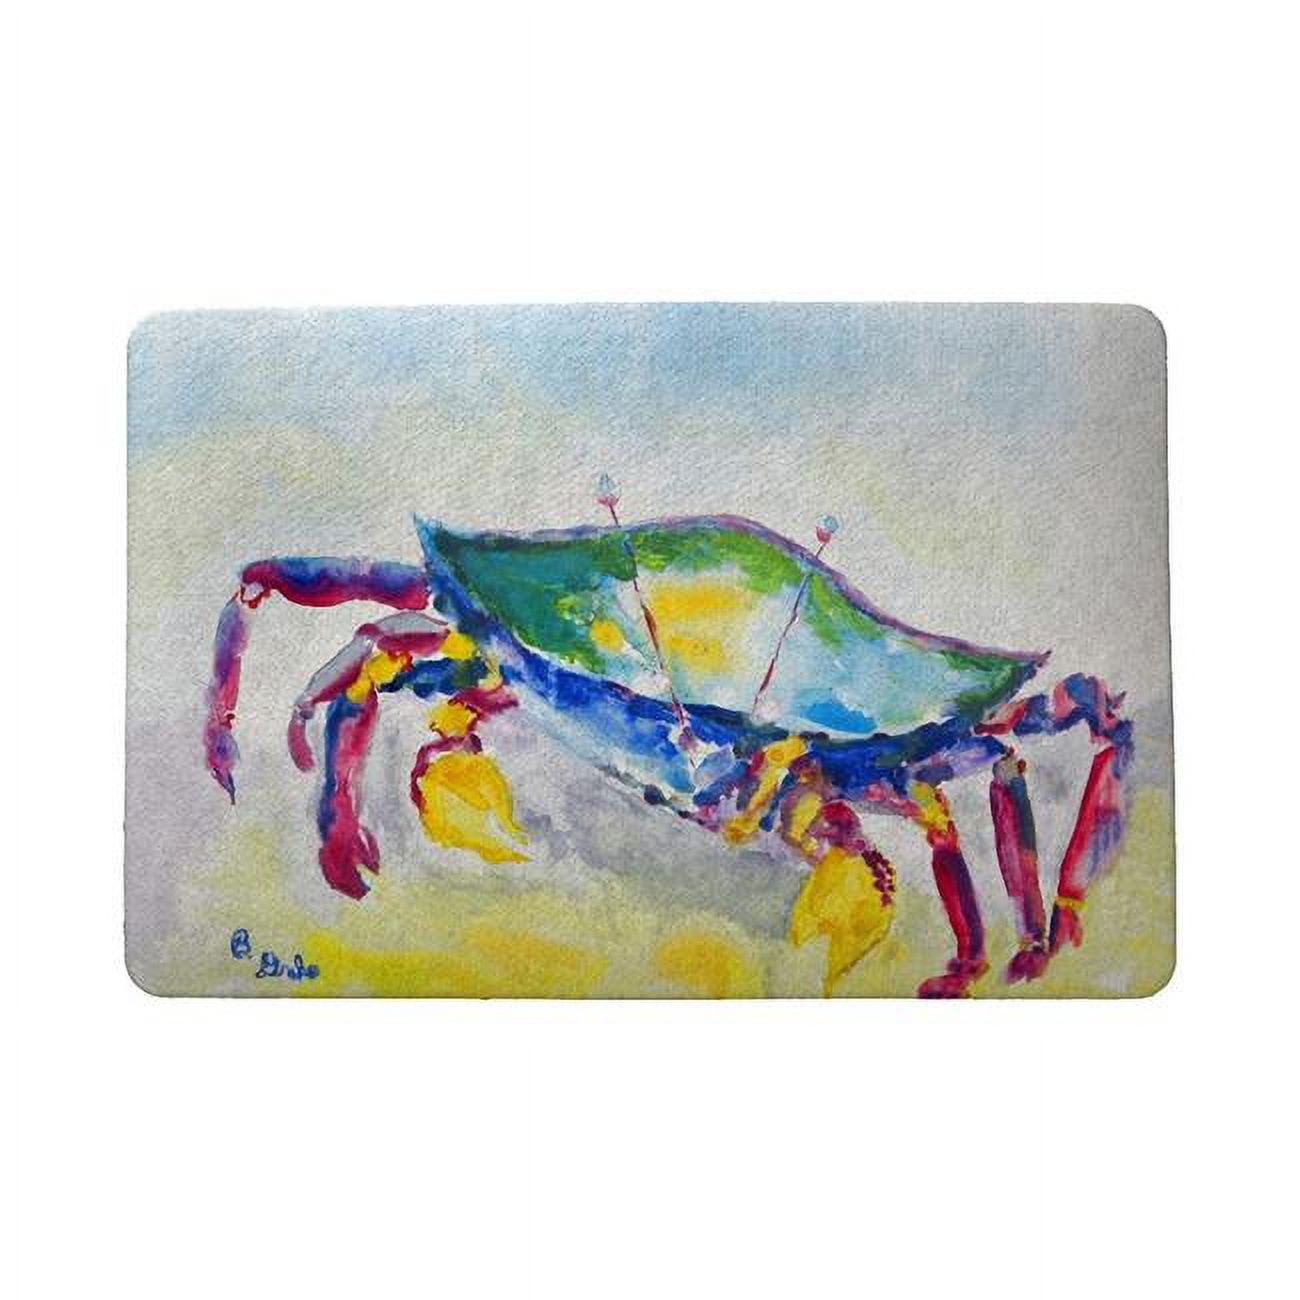 Dm896 18 X 26 In. Crawling Crab Door Mat